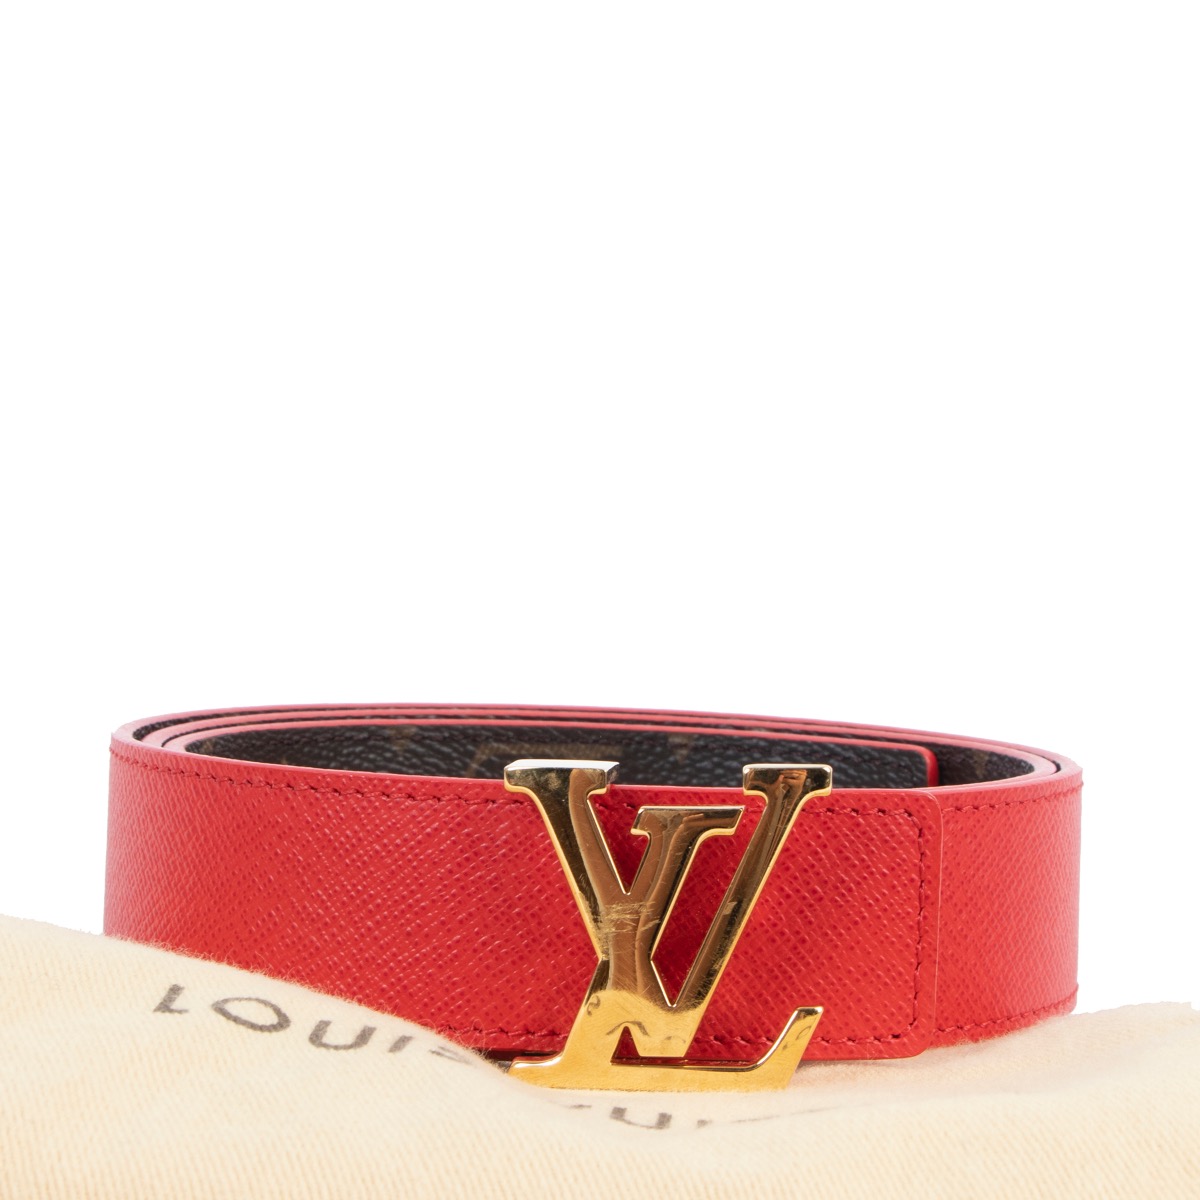 Louis Vuitton belt , Slight red distressed threads